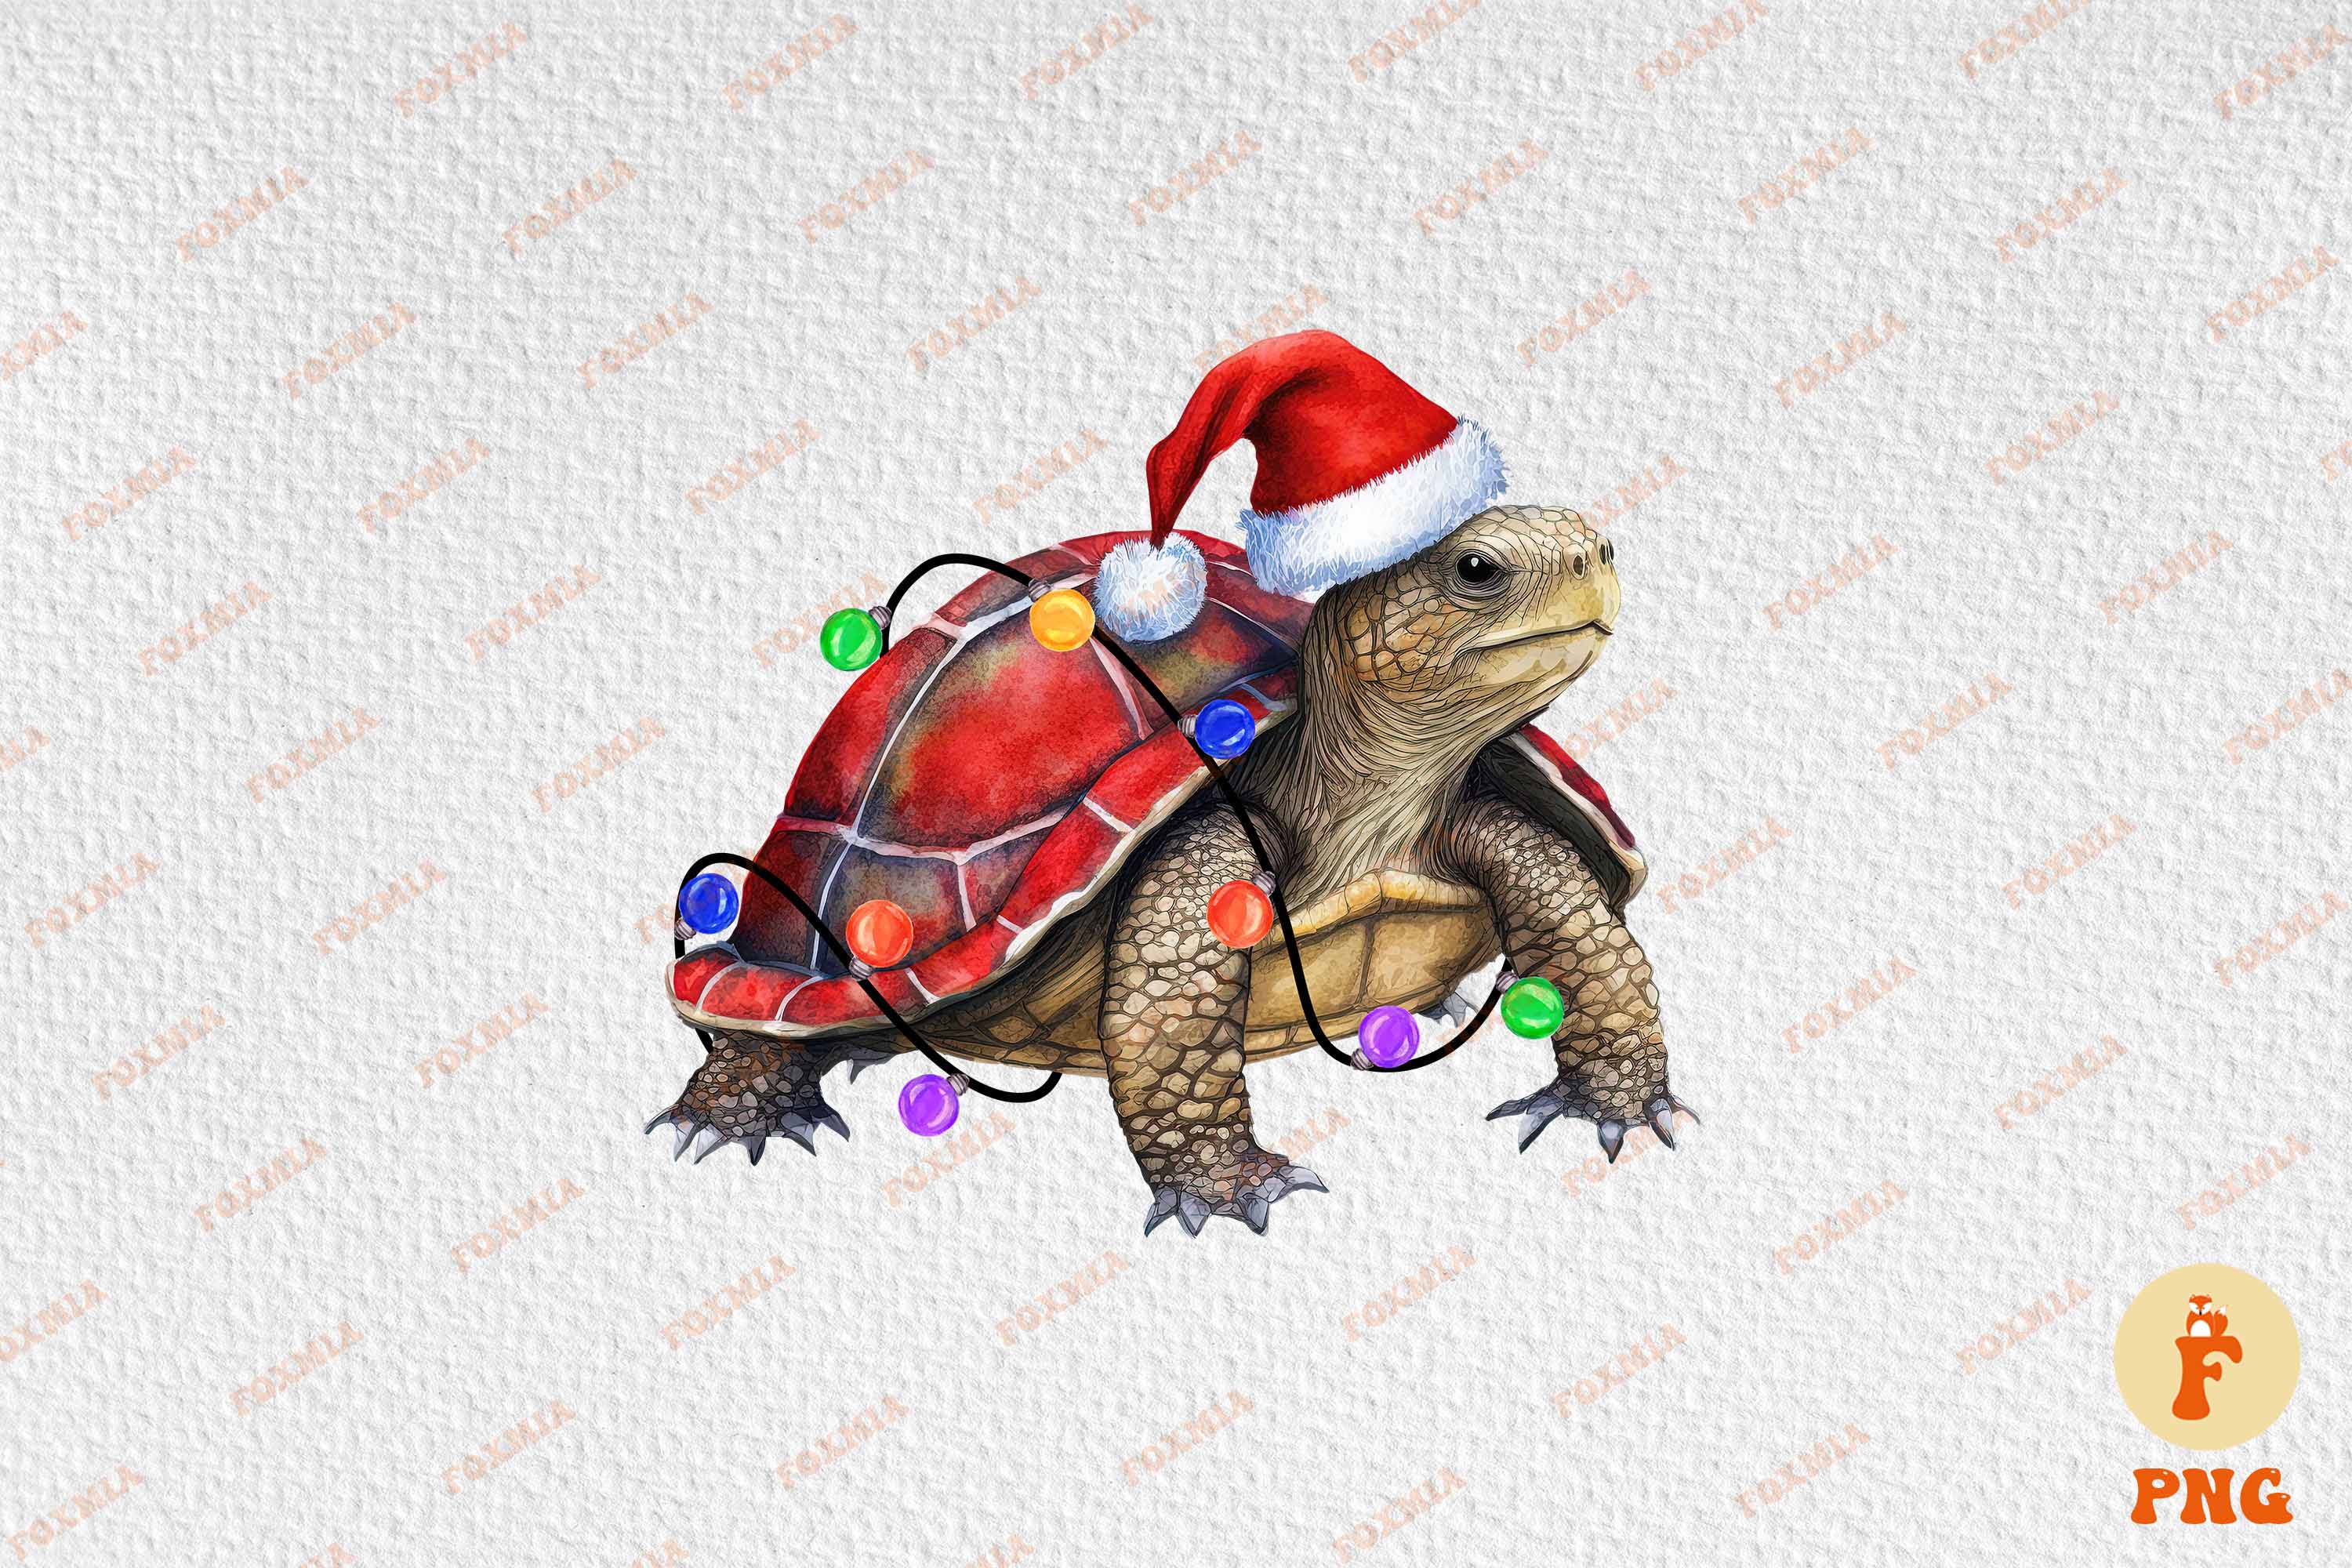 Wonderful image of a turtle wearing a santa hat.